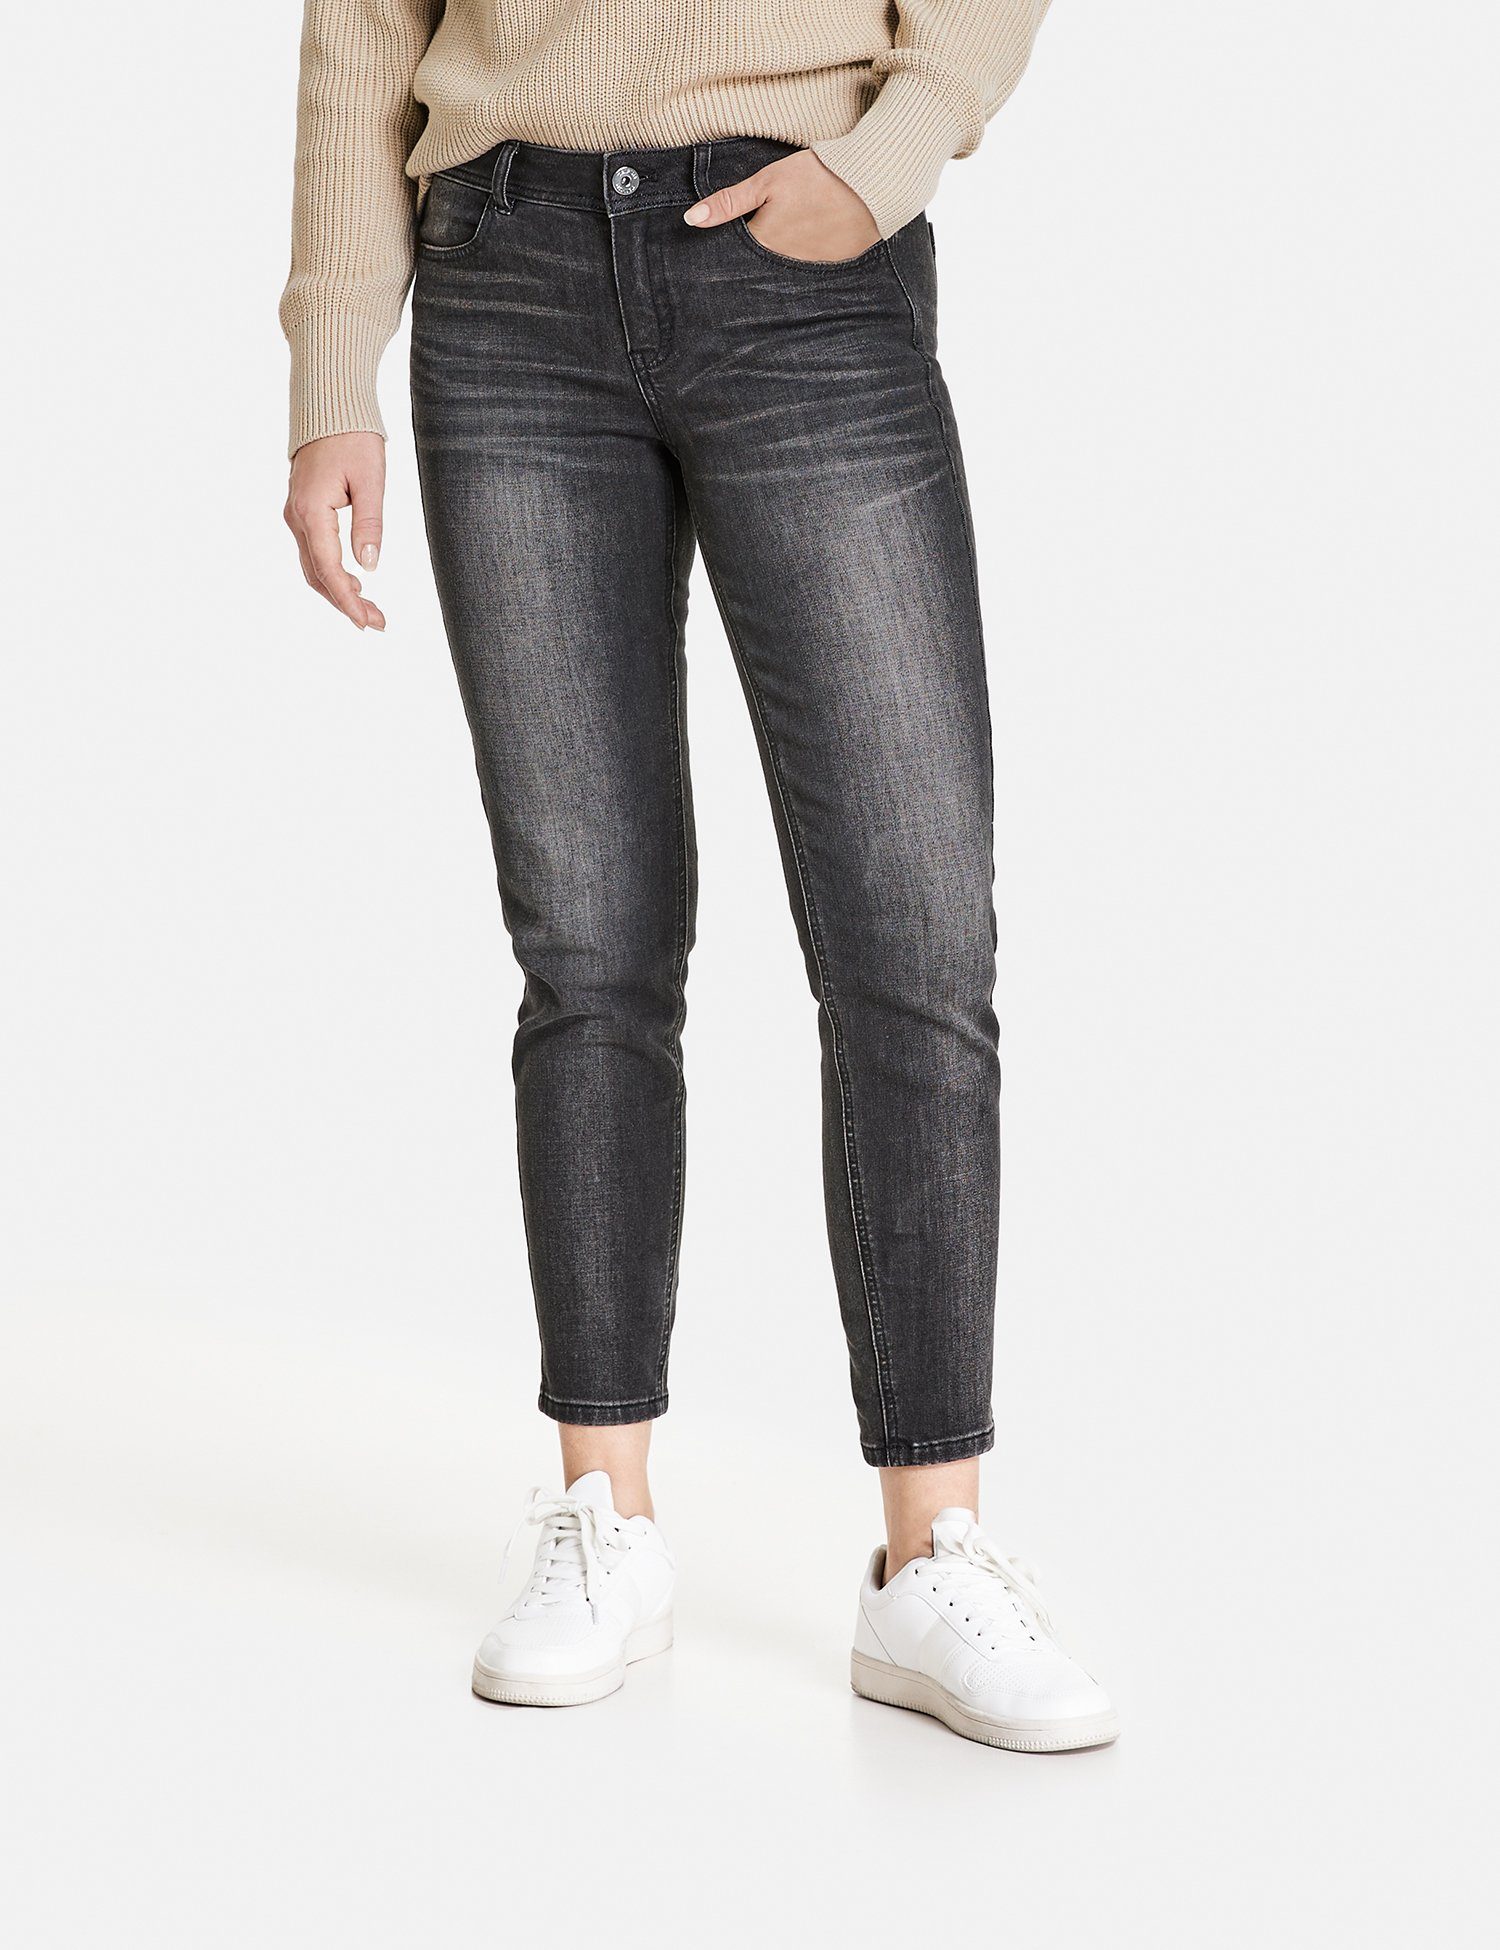 Taifun Stretch-Jeans 7/8 Jeans Skinny TS online kaufen | OTTO